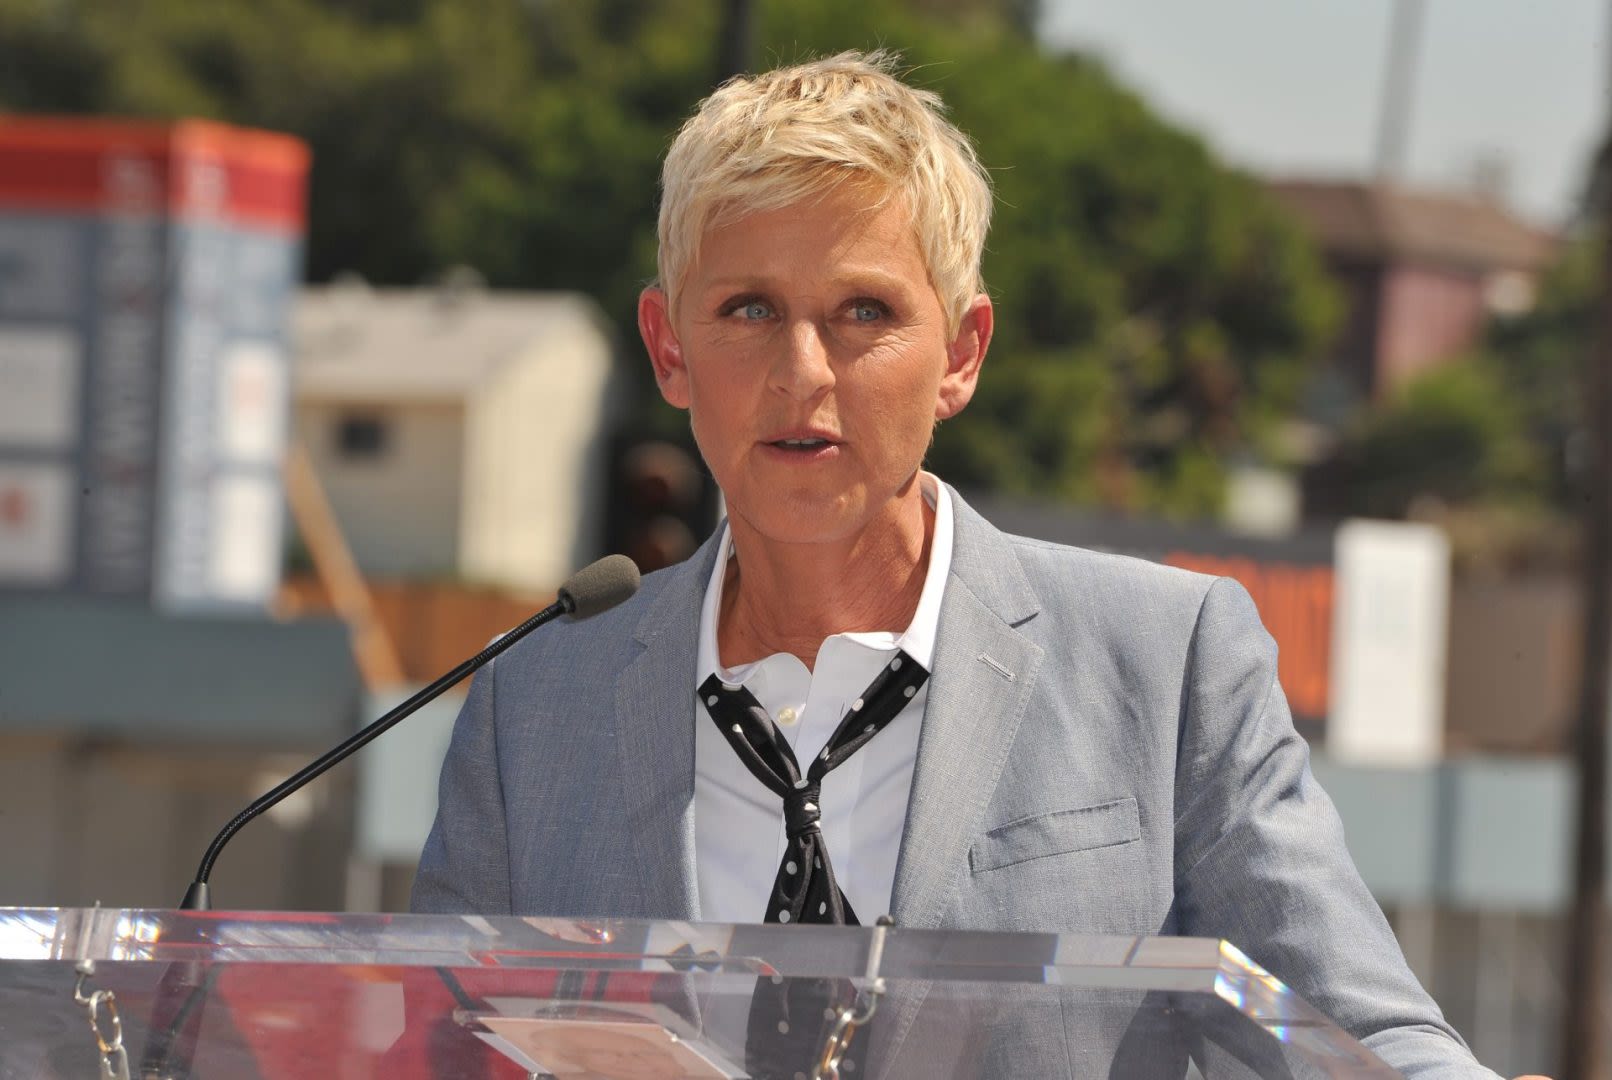 Ellen DeGeneres announces dates for her 'final' stand-up comedy tour